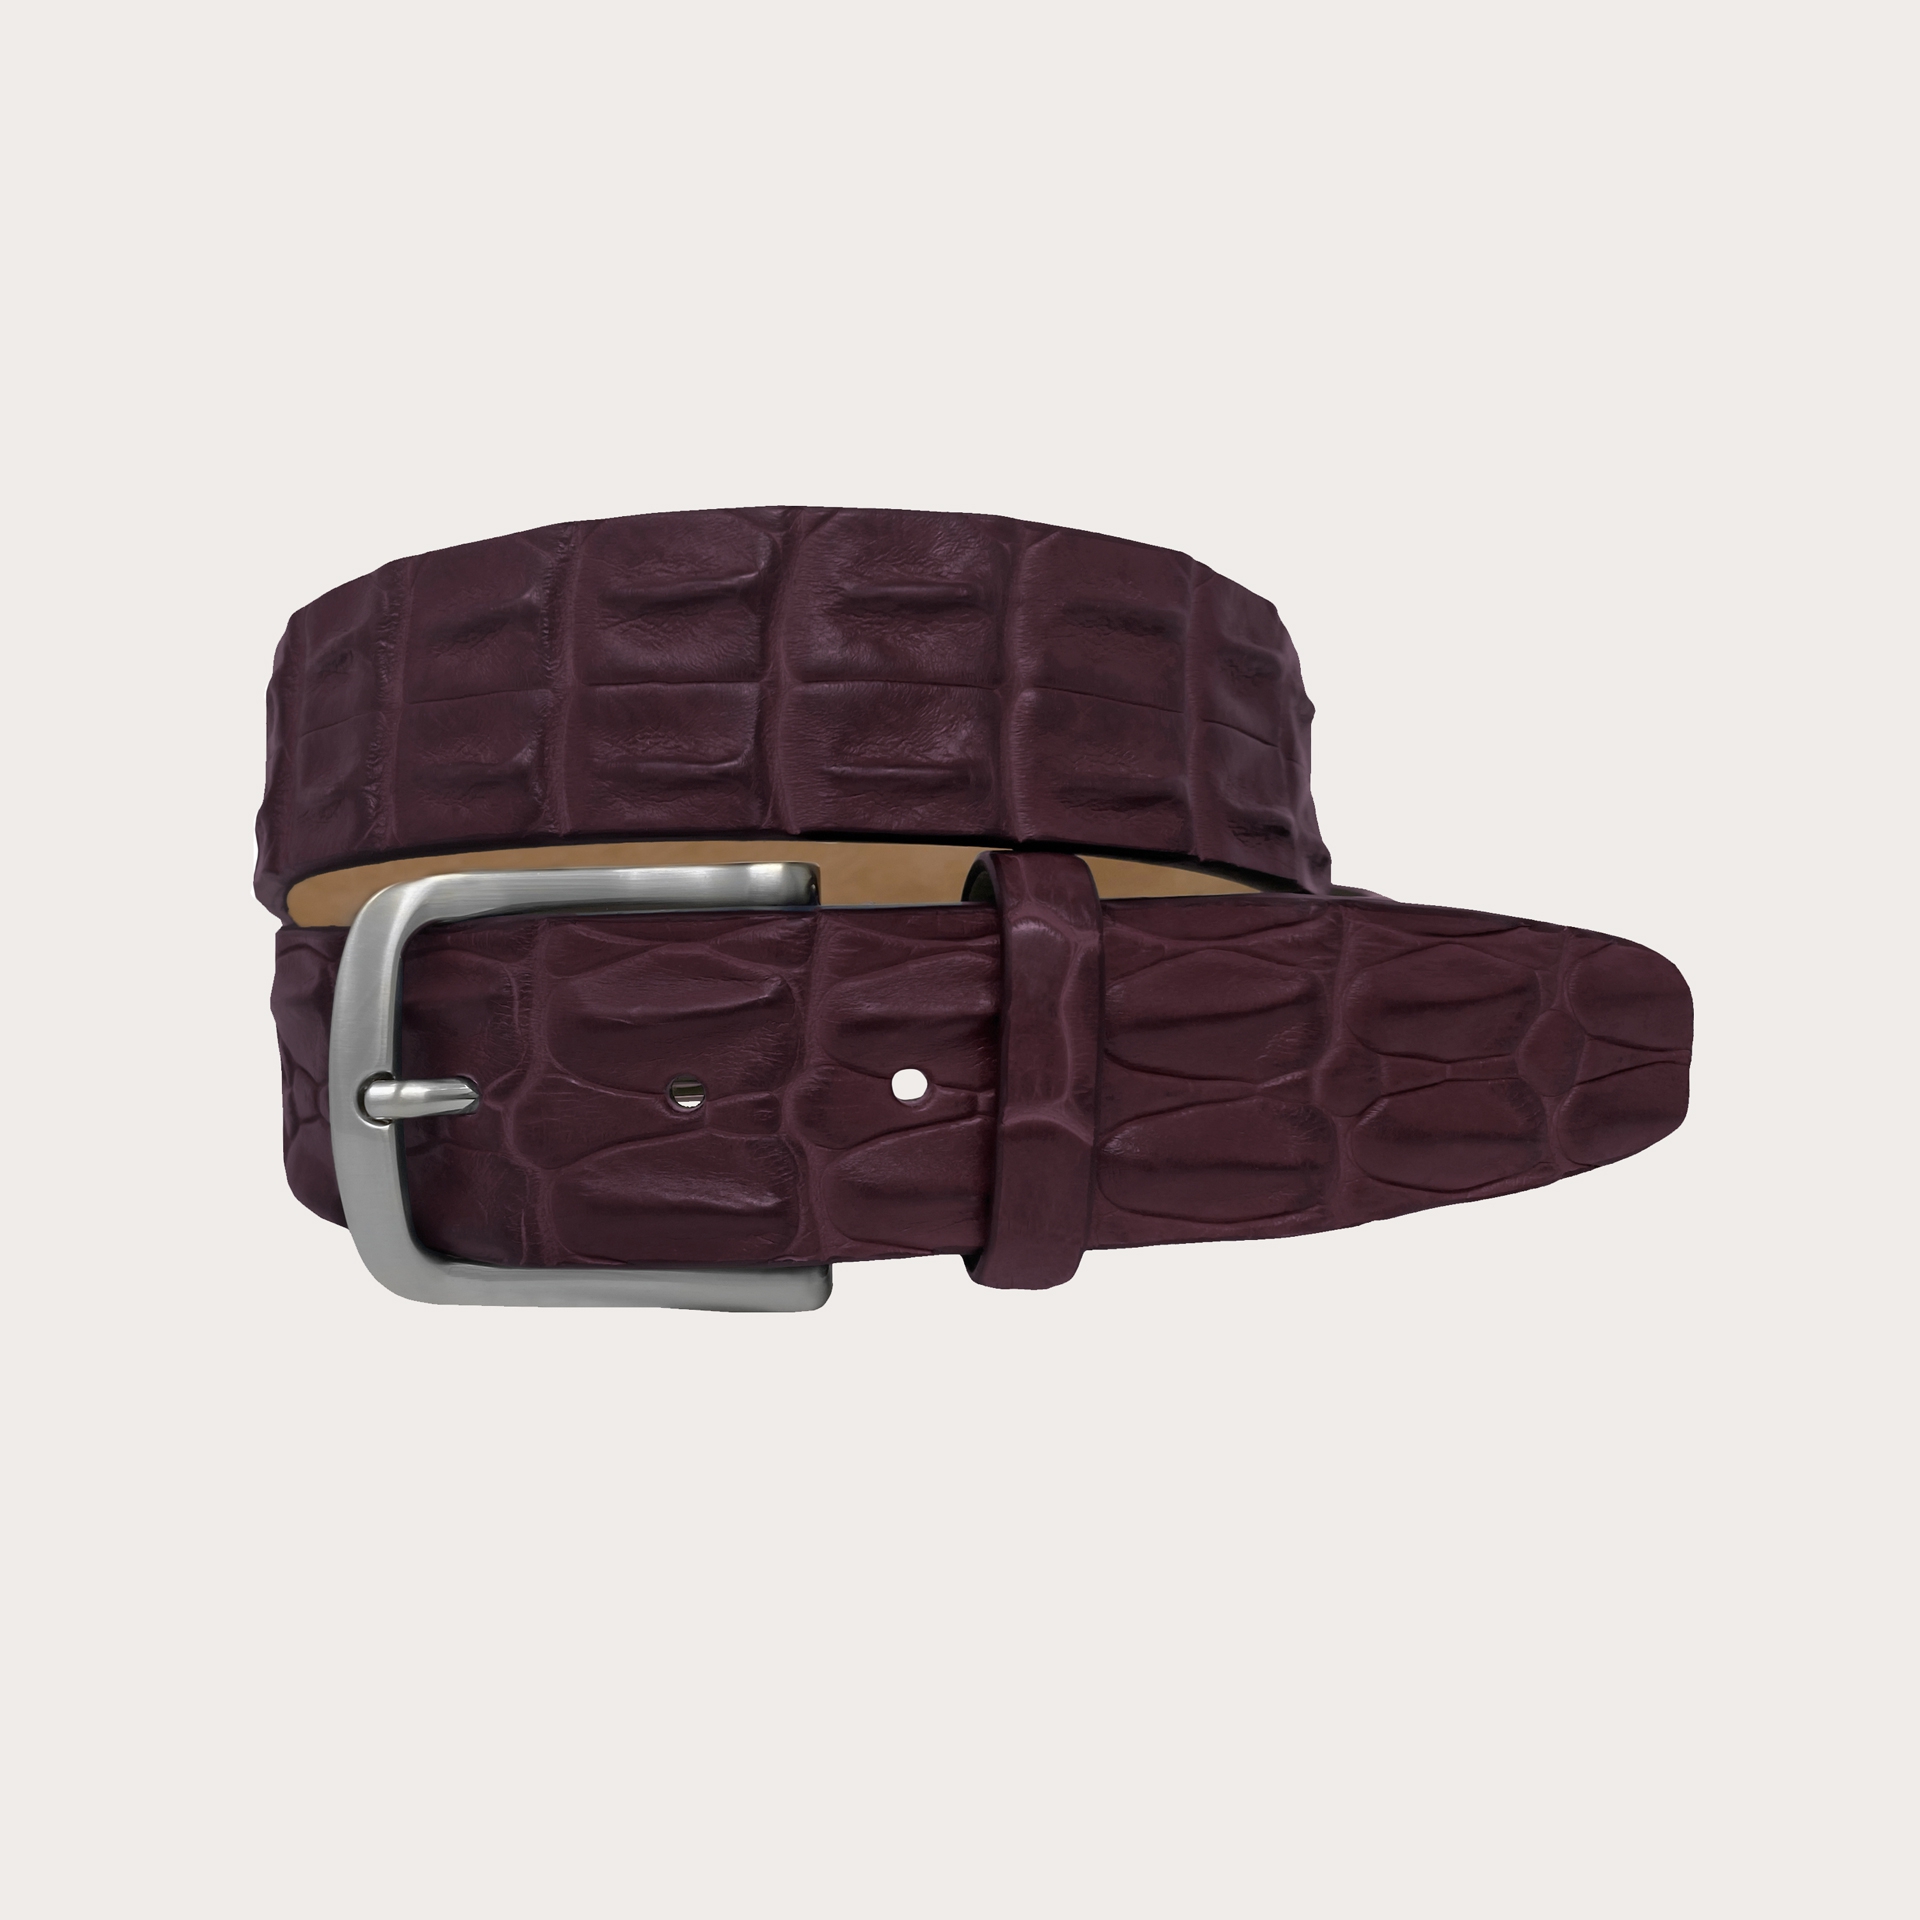 BRUCLE Cintura casual nickel free in schiena di coccodrillo, burgundy